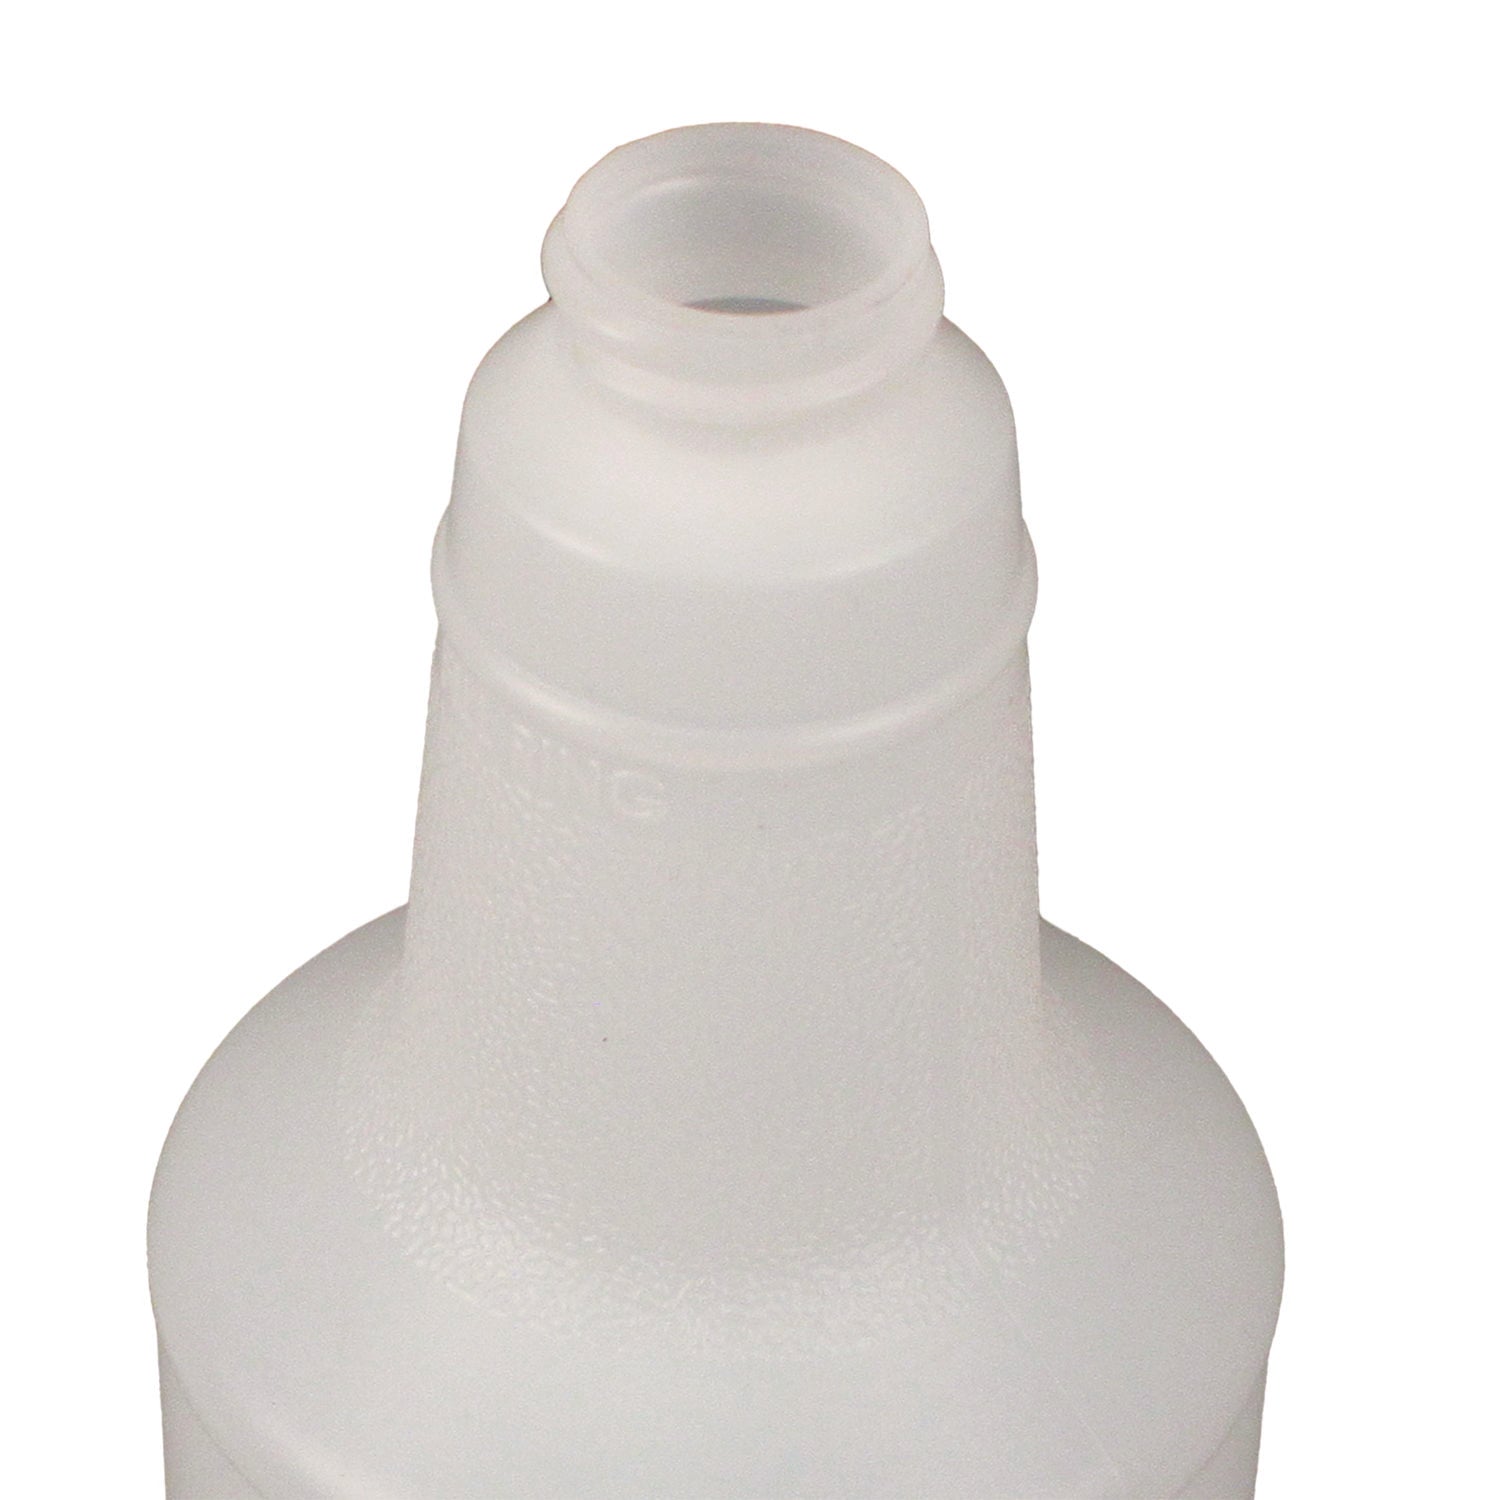 plastic-bottles-with-graduations-32-oz-clear-12-carton_imp5032wgdzun - 3